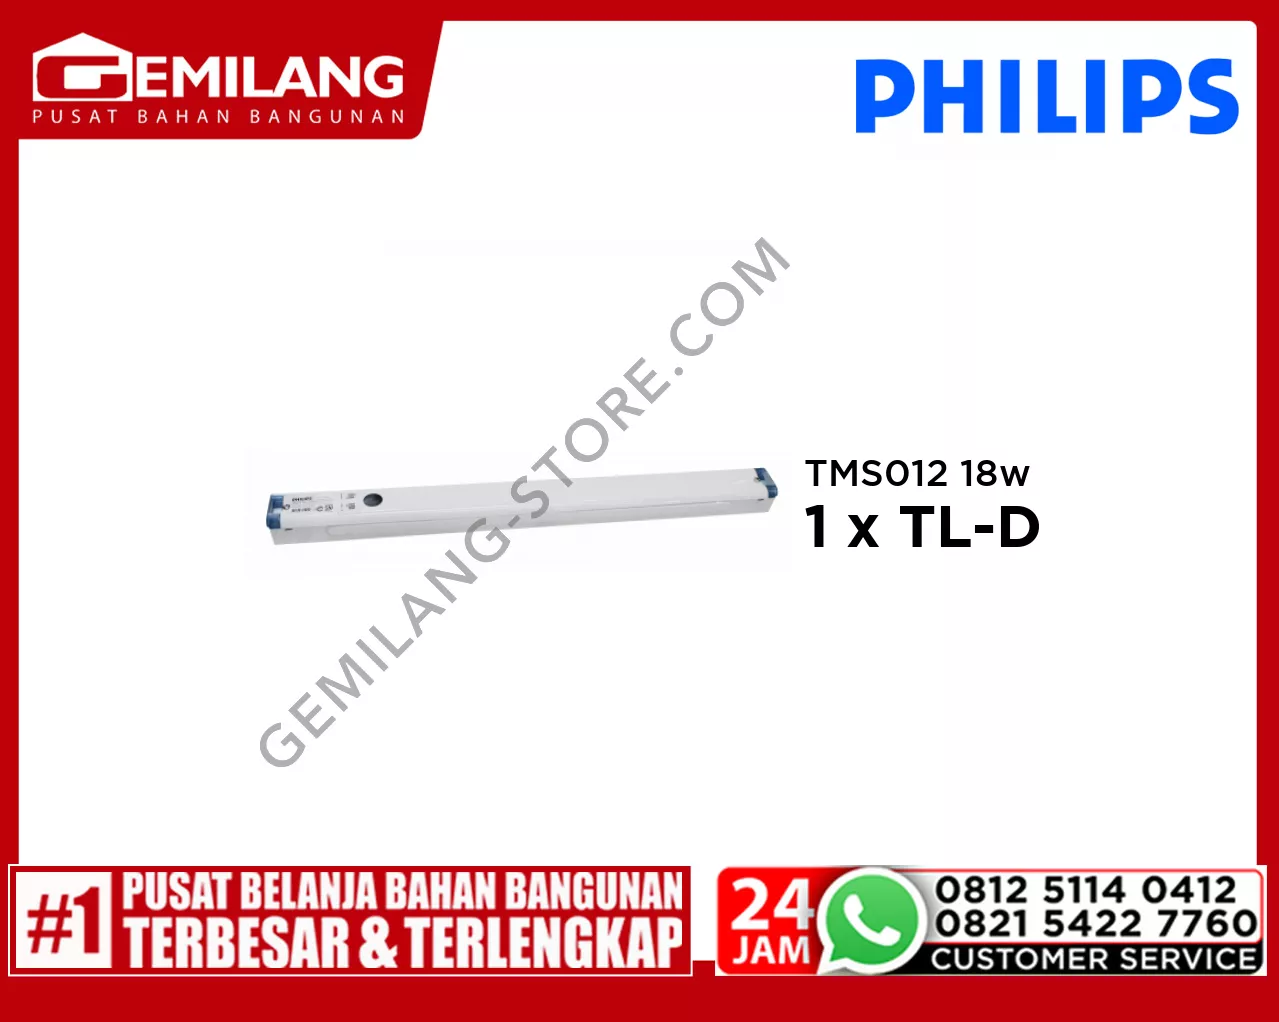 PHILIPS TMS012 1 x TL-D 18w